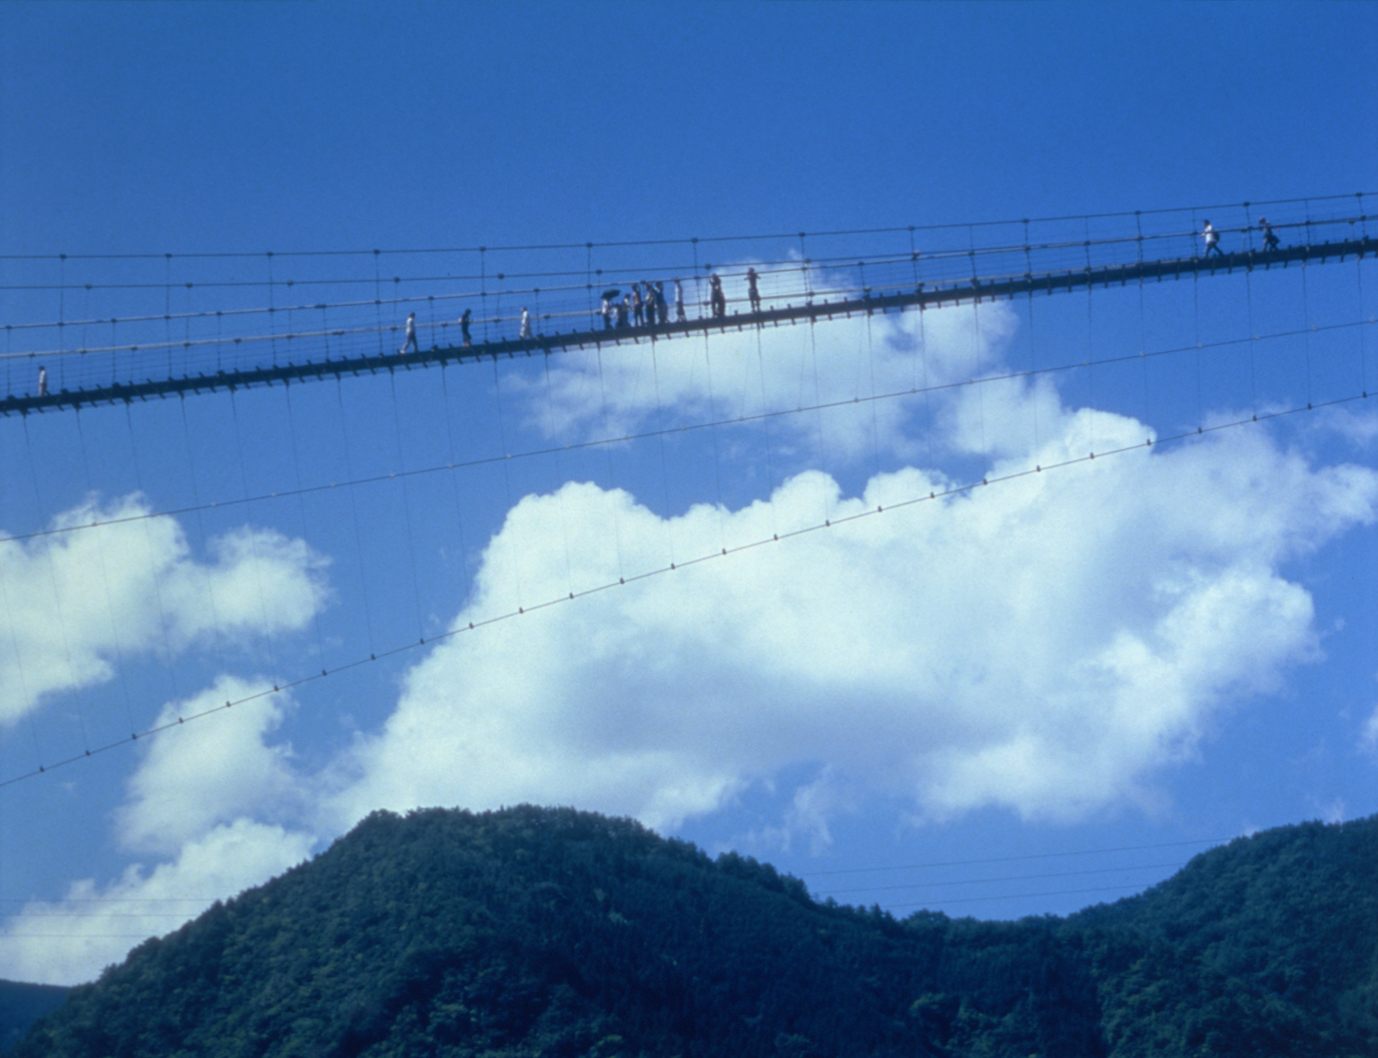 The Tanize Suspension Bridge in Totsukawa Village near Shinohara is one of the longest suspension bridges in Japan.